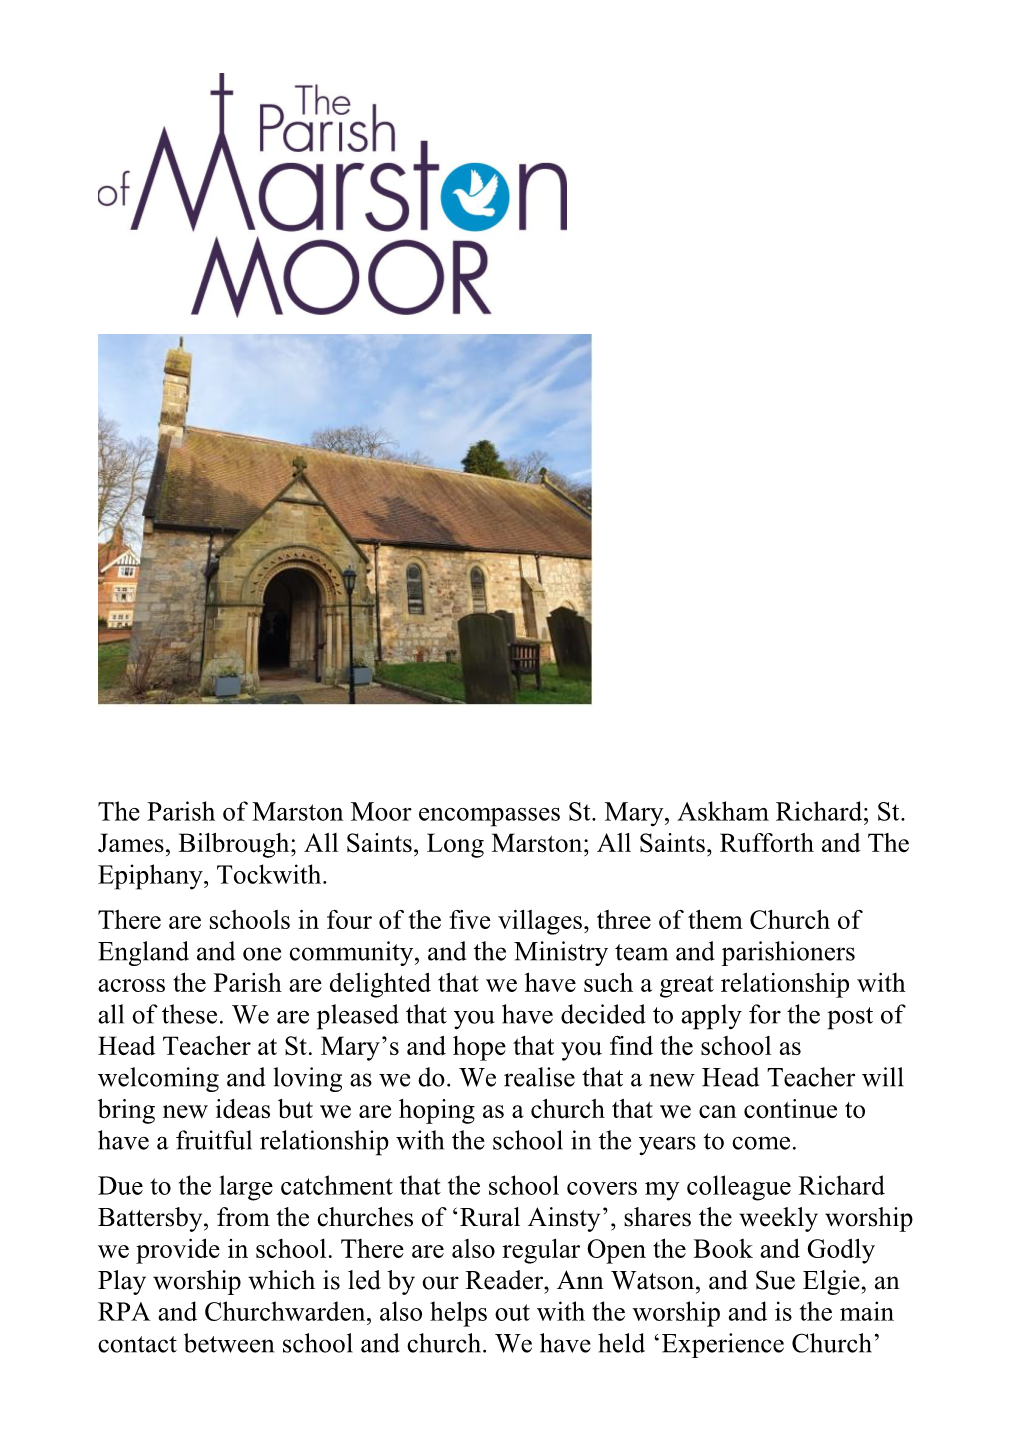 The Parish of Marston Moor Encompasses St. Mary, Askham Richard; St